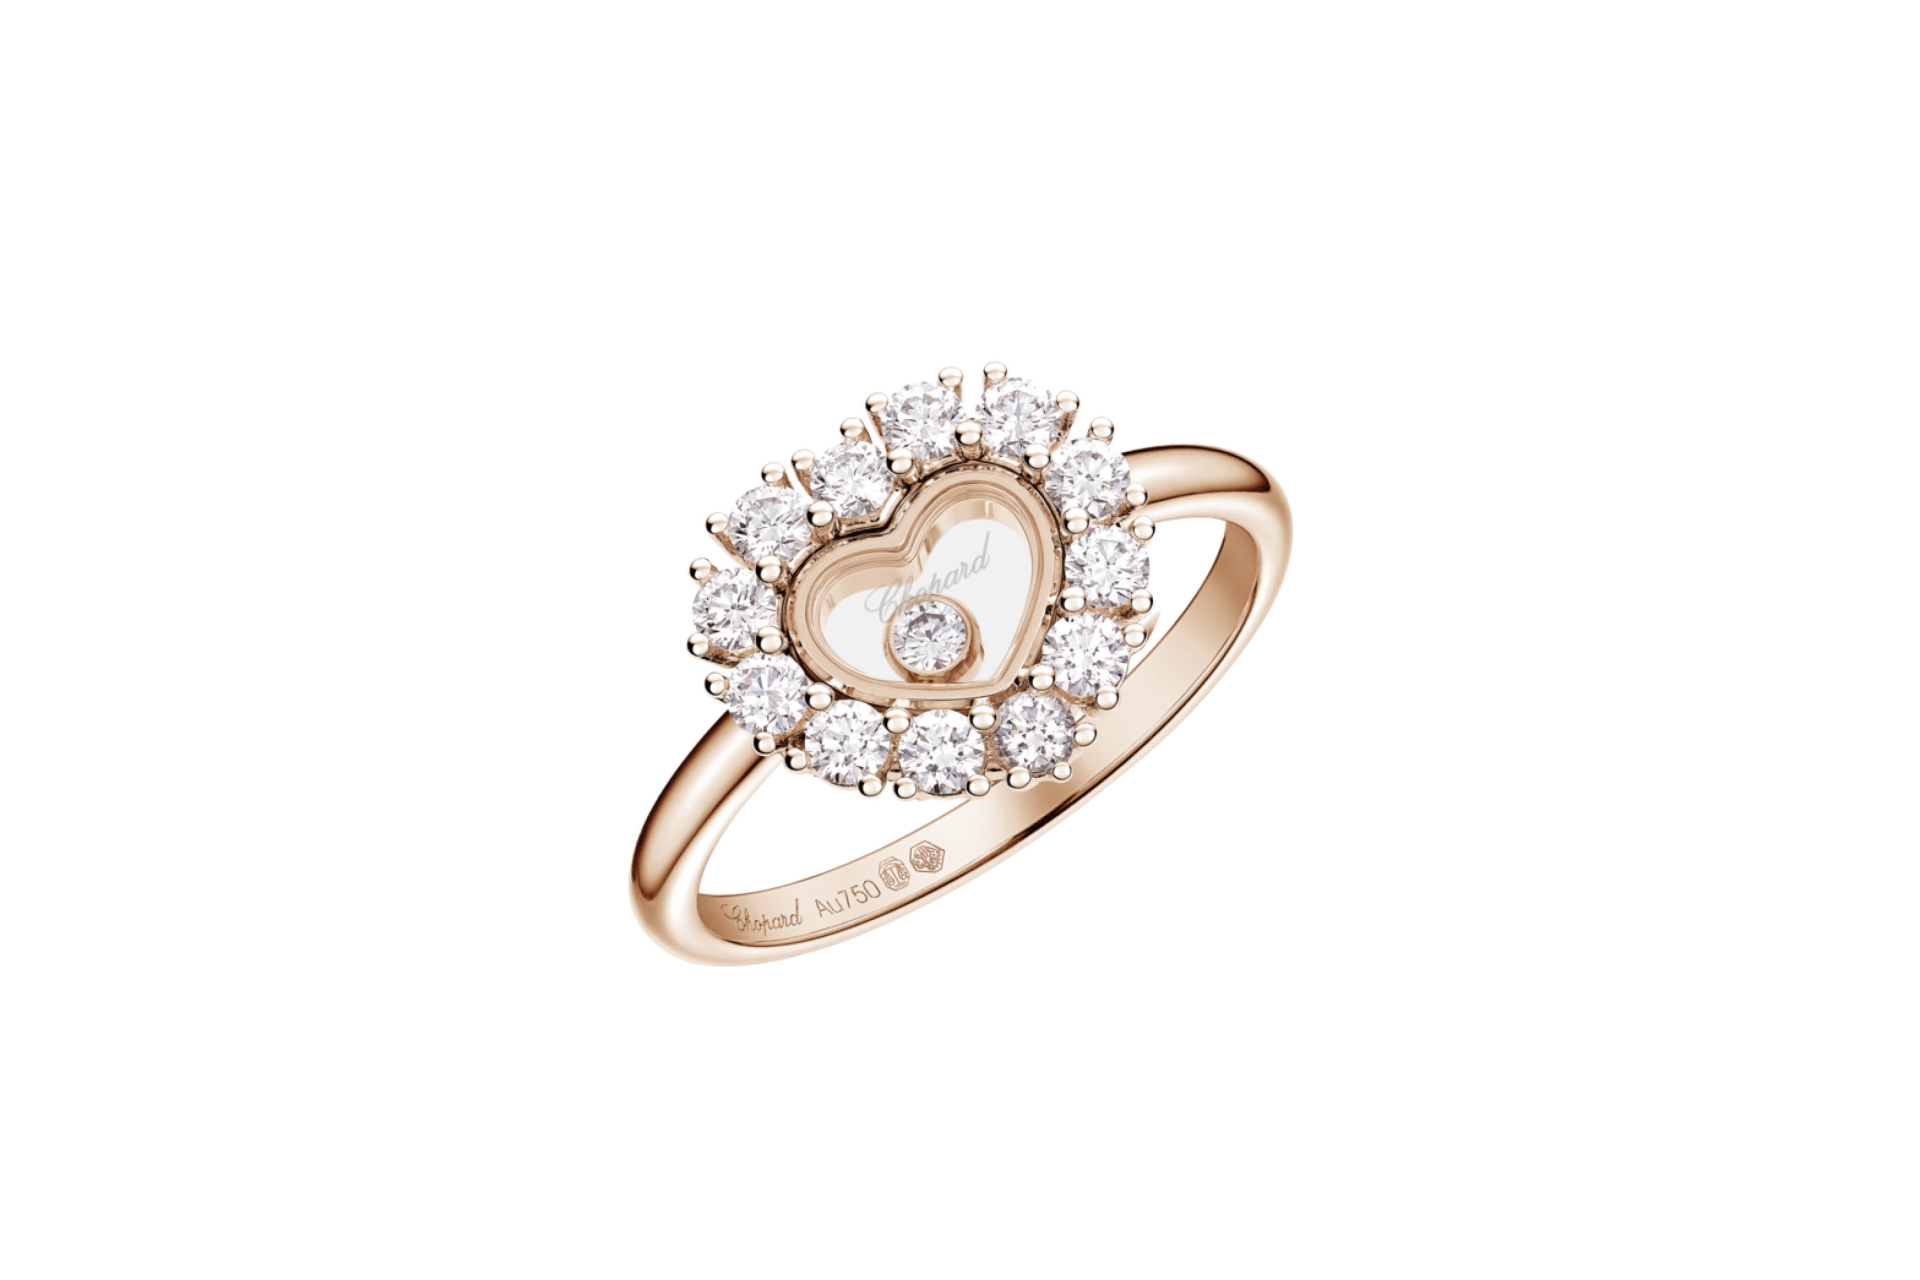 jennifer-kathe-schmuckfavoriten-luxury-jewelry-juwelier-brillantschmuck-diamanten5